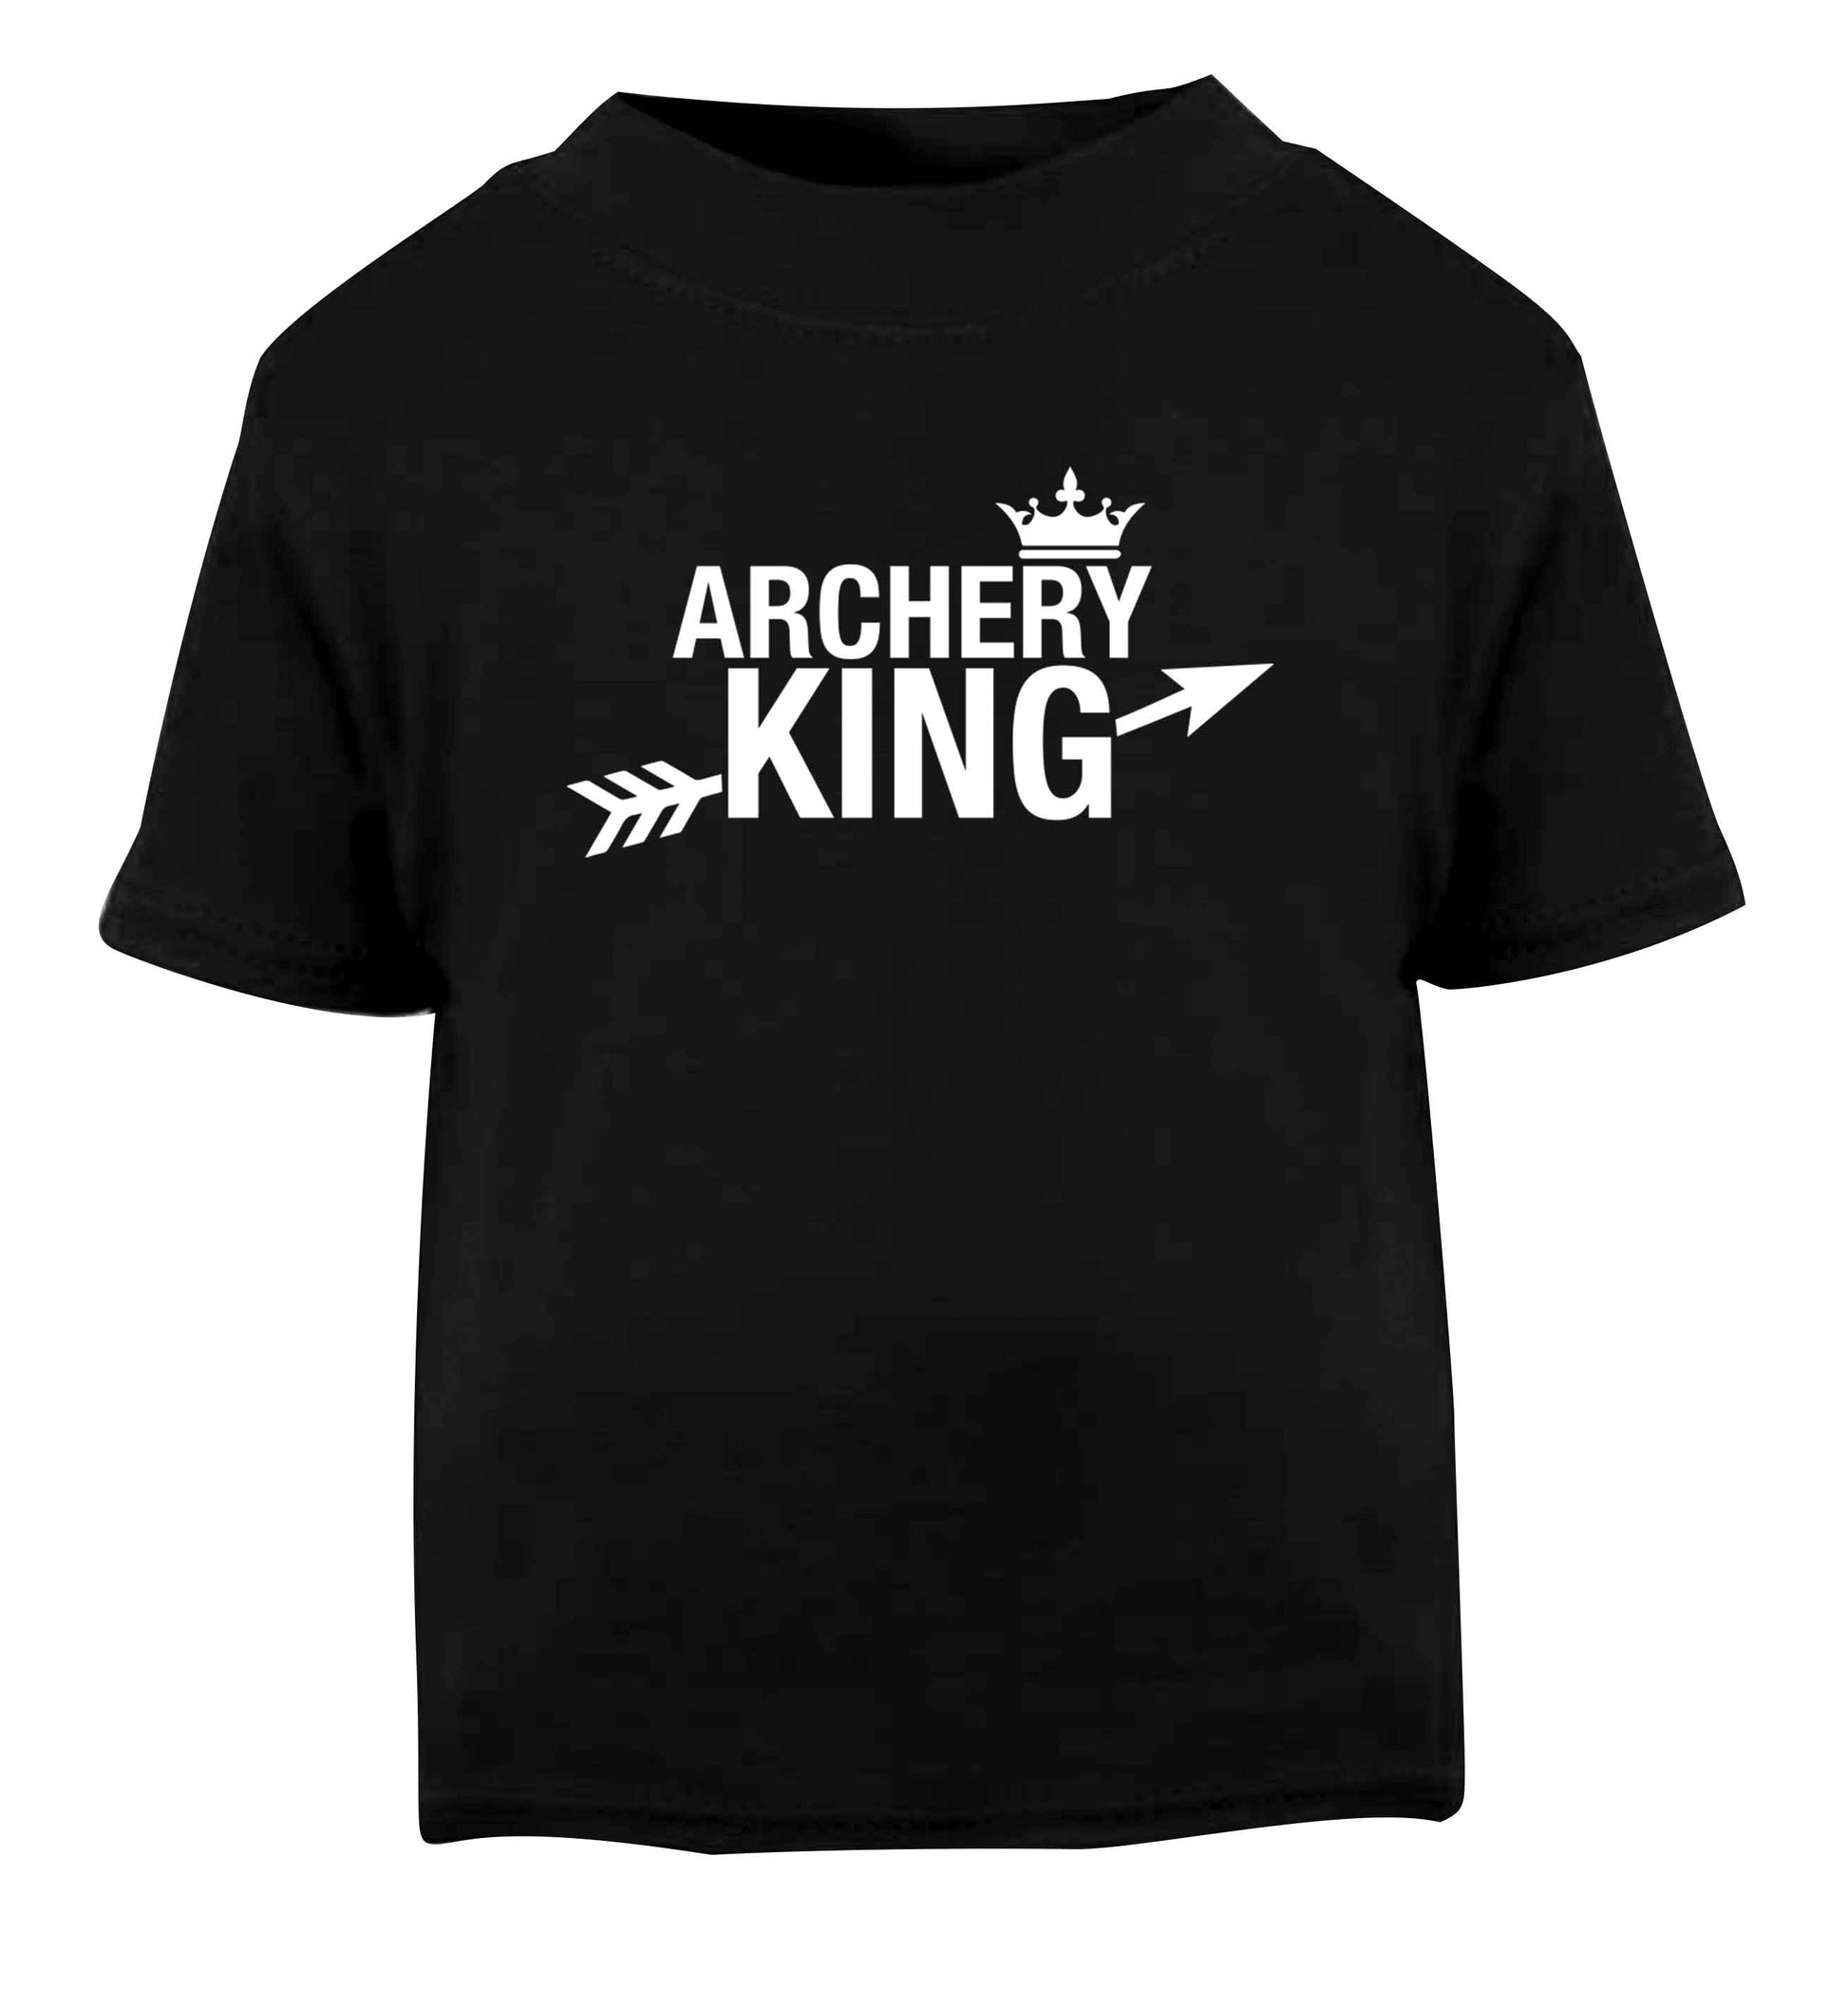 Archery king Black Baby Toddler Tshirt 2 years